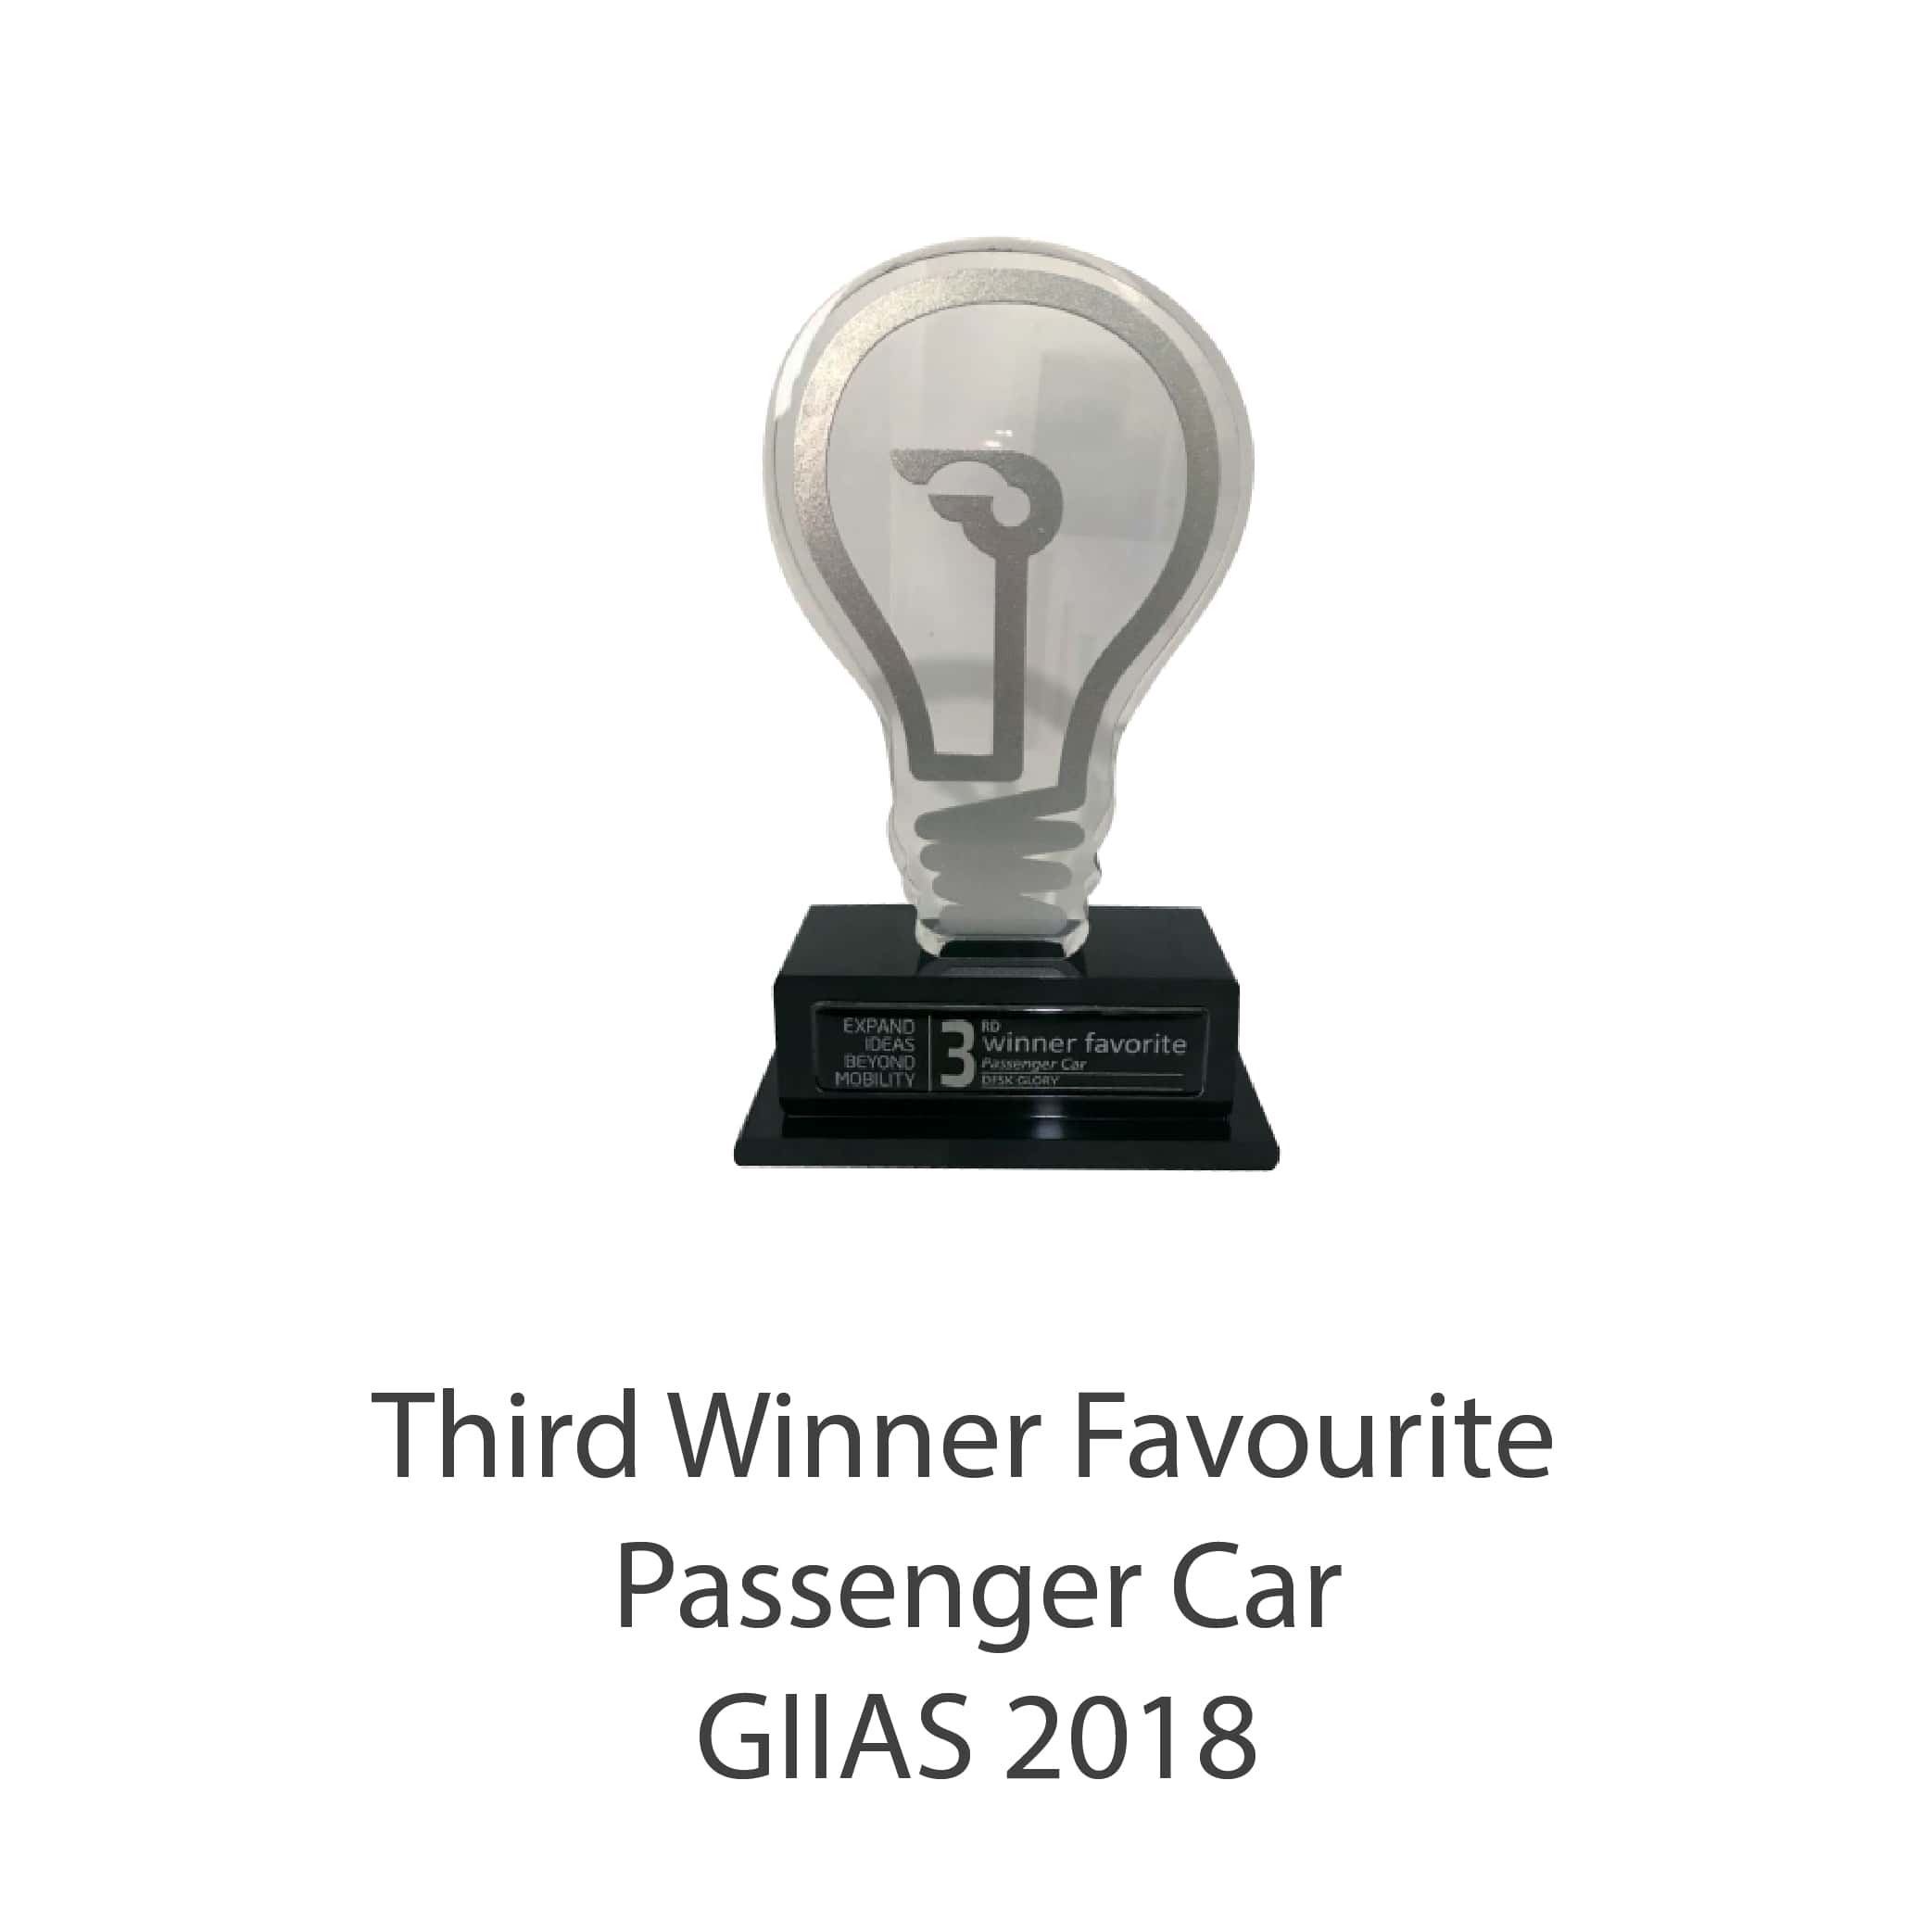 GIIAS 2018 Third Winner Favorite Passenger Car - DFSK Glory 580